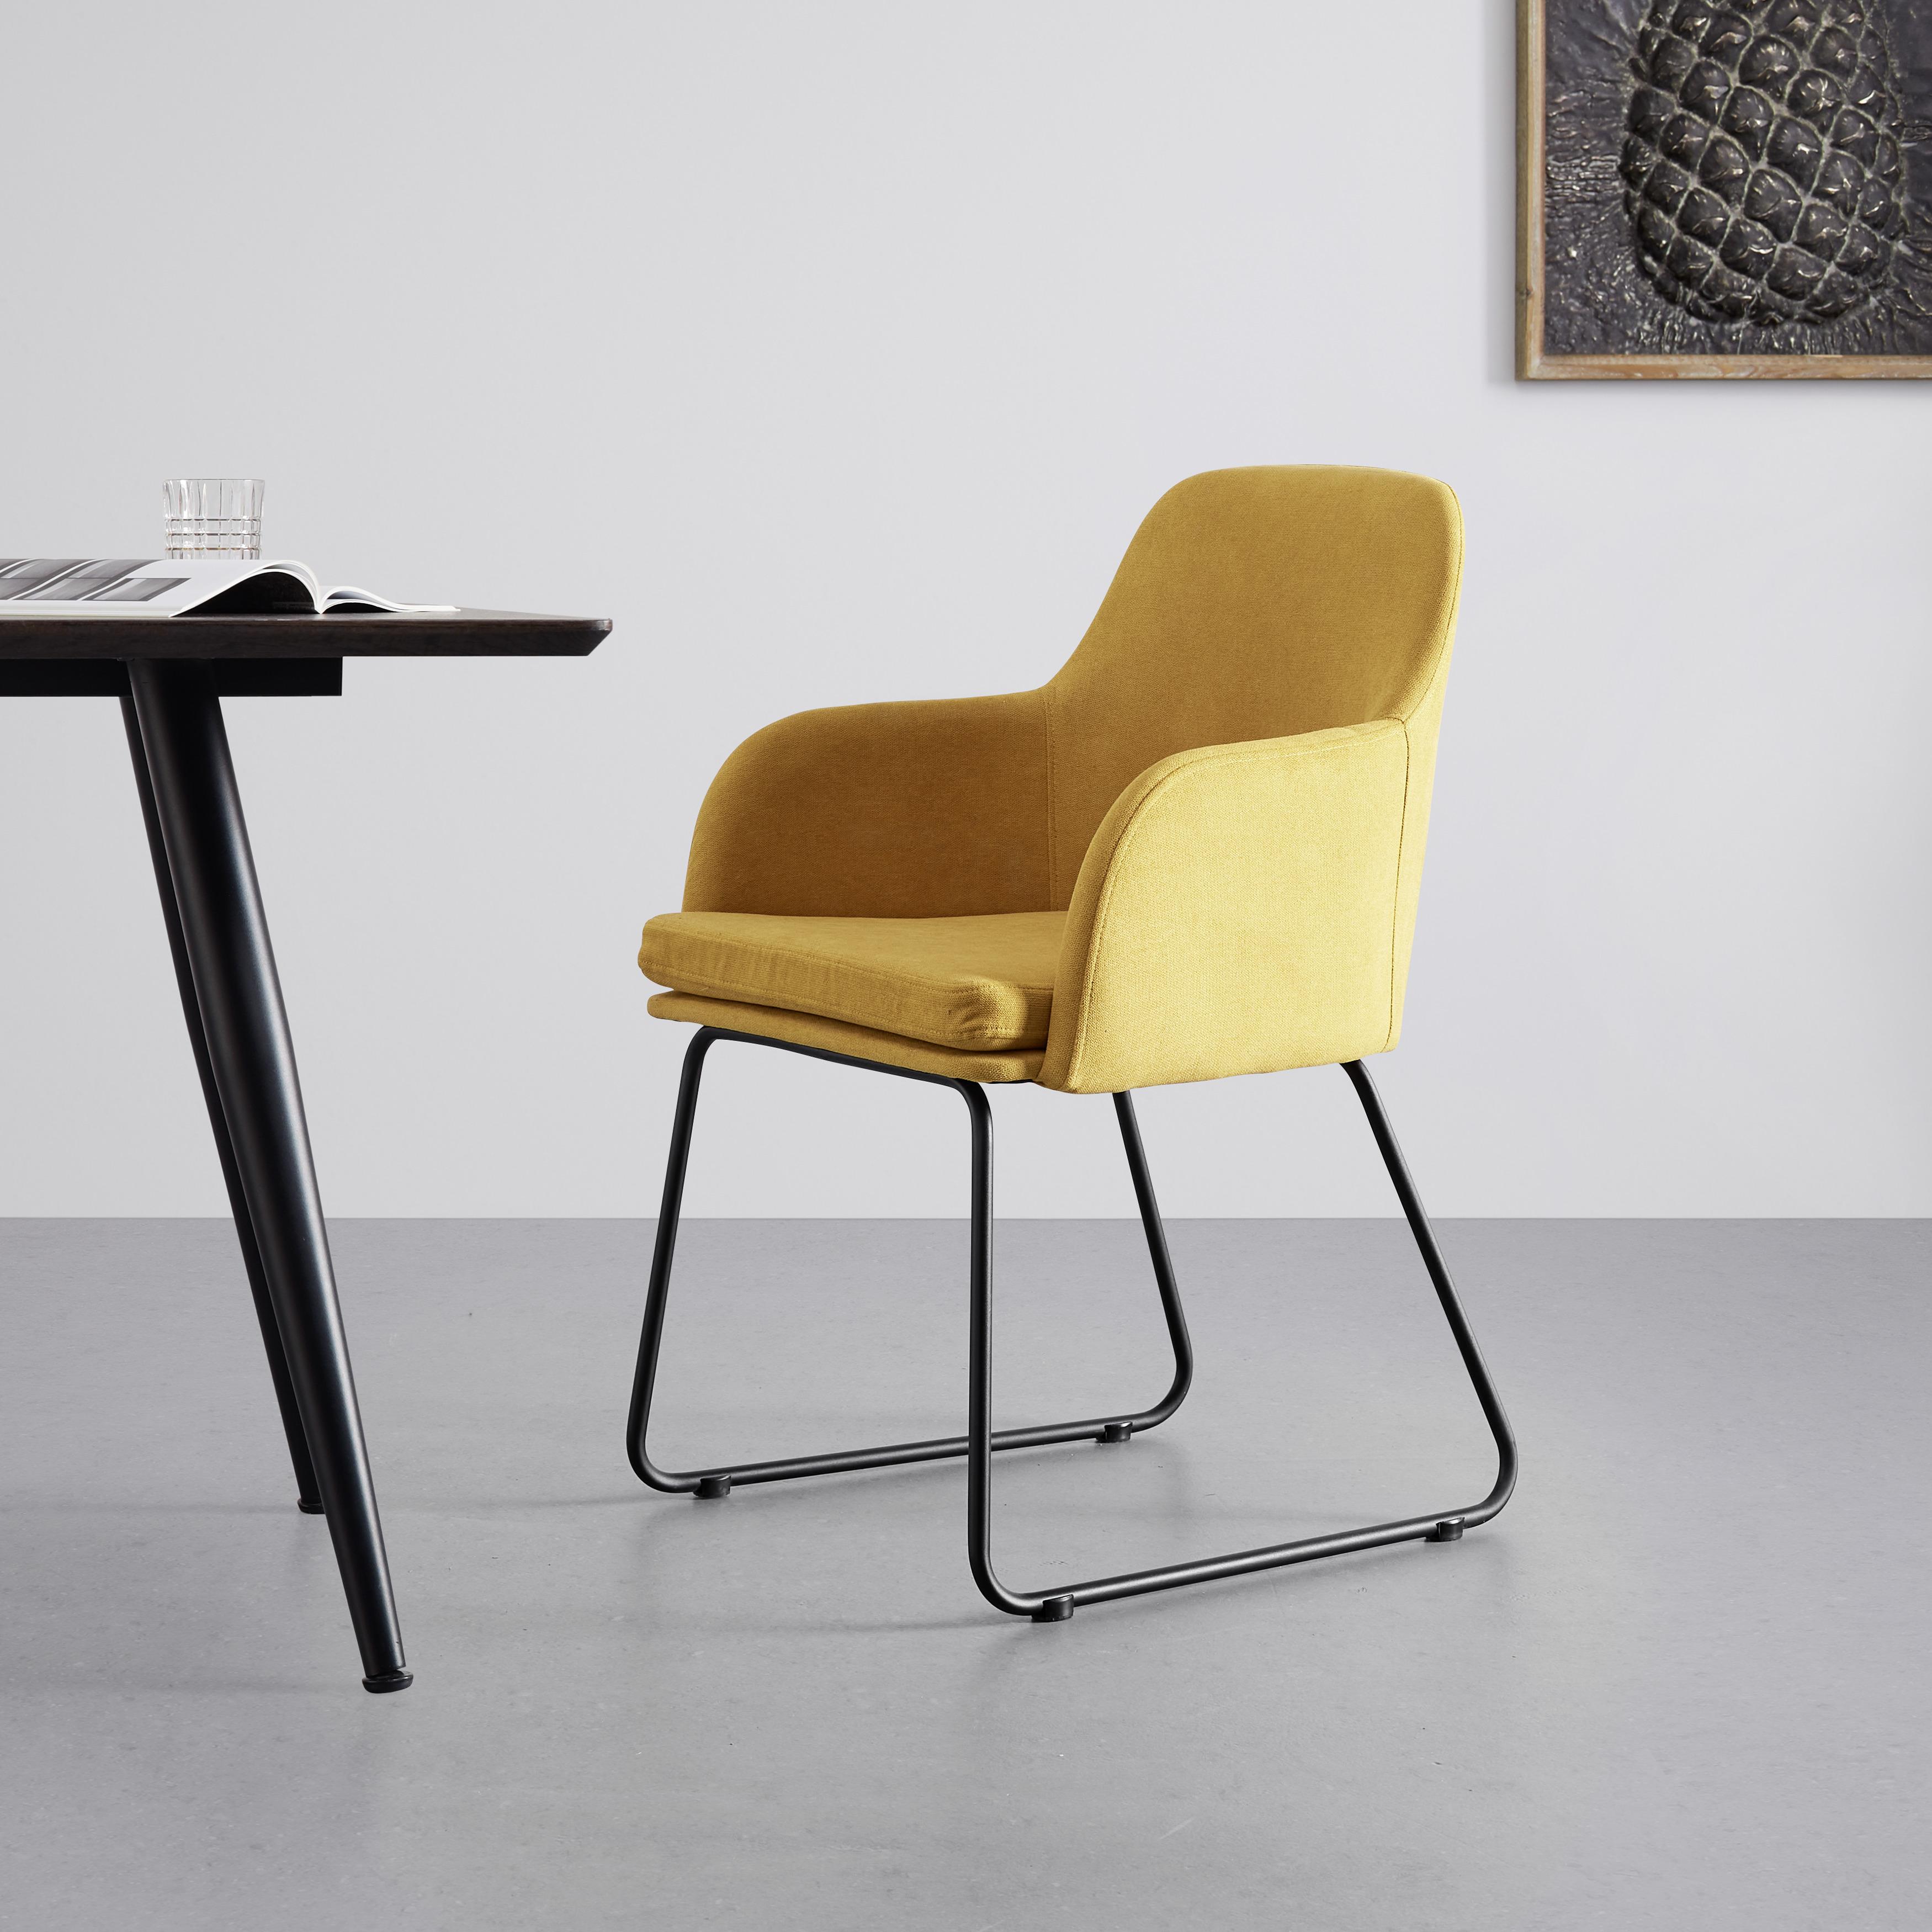 Židle S Podroučkami Mia Žlutá - černá/žlutá, Moderní, kov/textil (55,5/83/55cm) - Bessagi Home